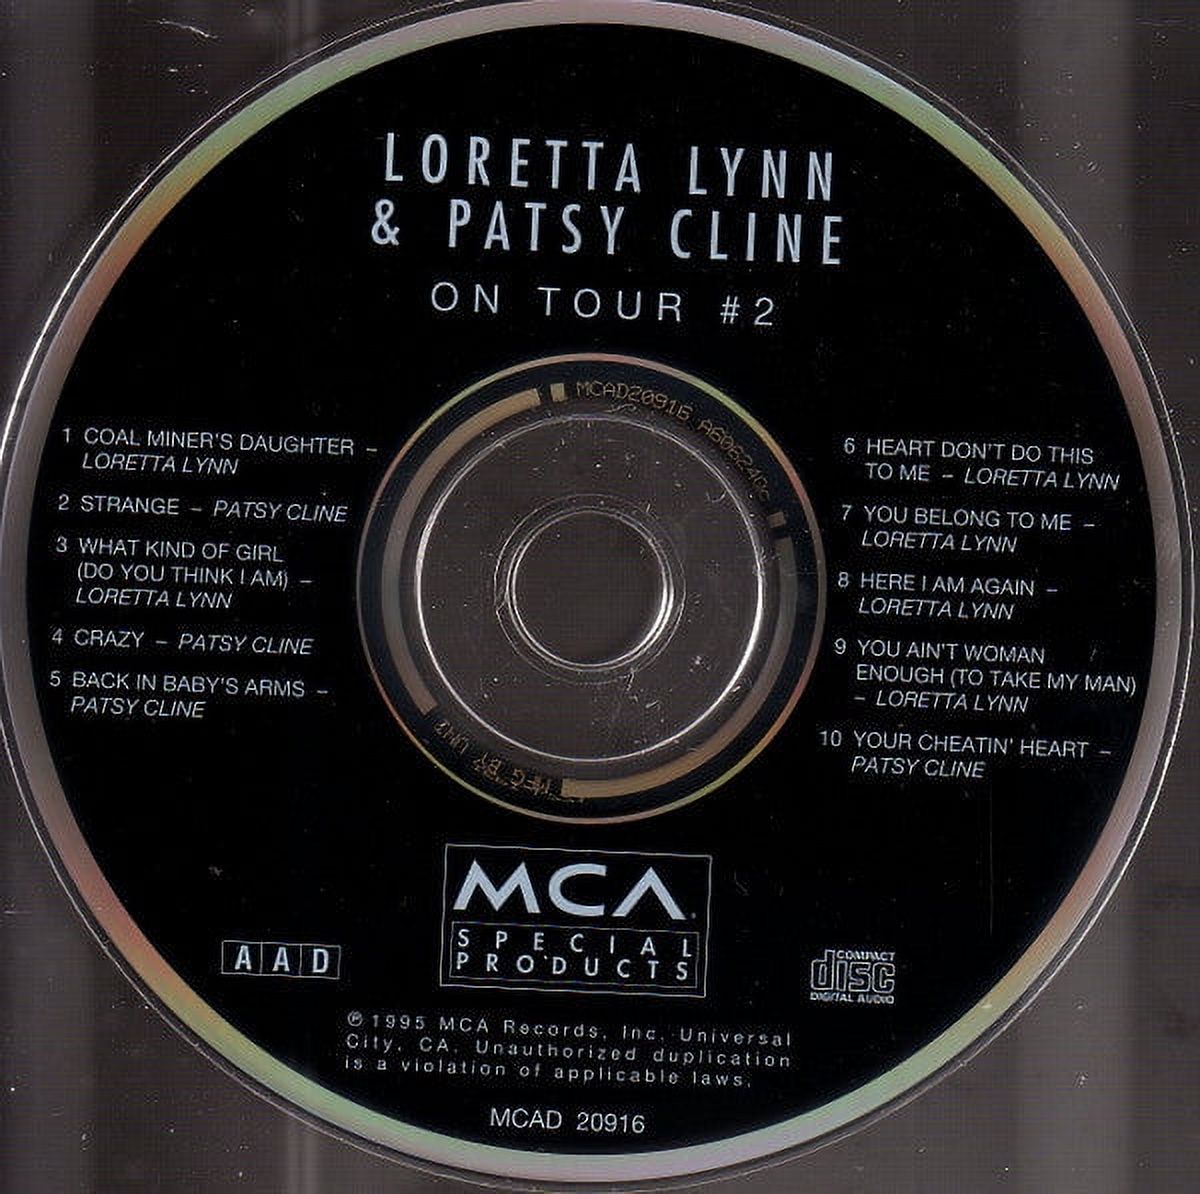 Patsy Cline, Loretta Lynn - On Tour #2 (CD) - image 3 of 3